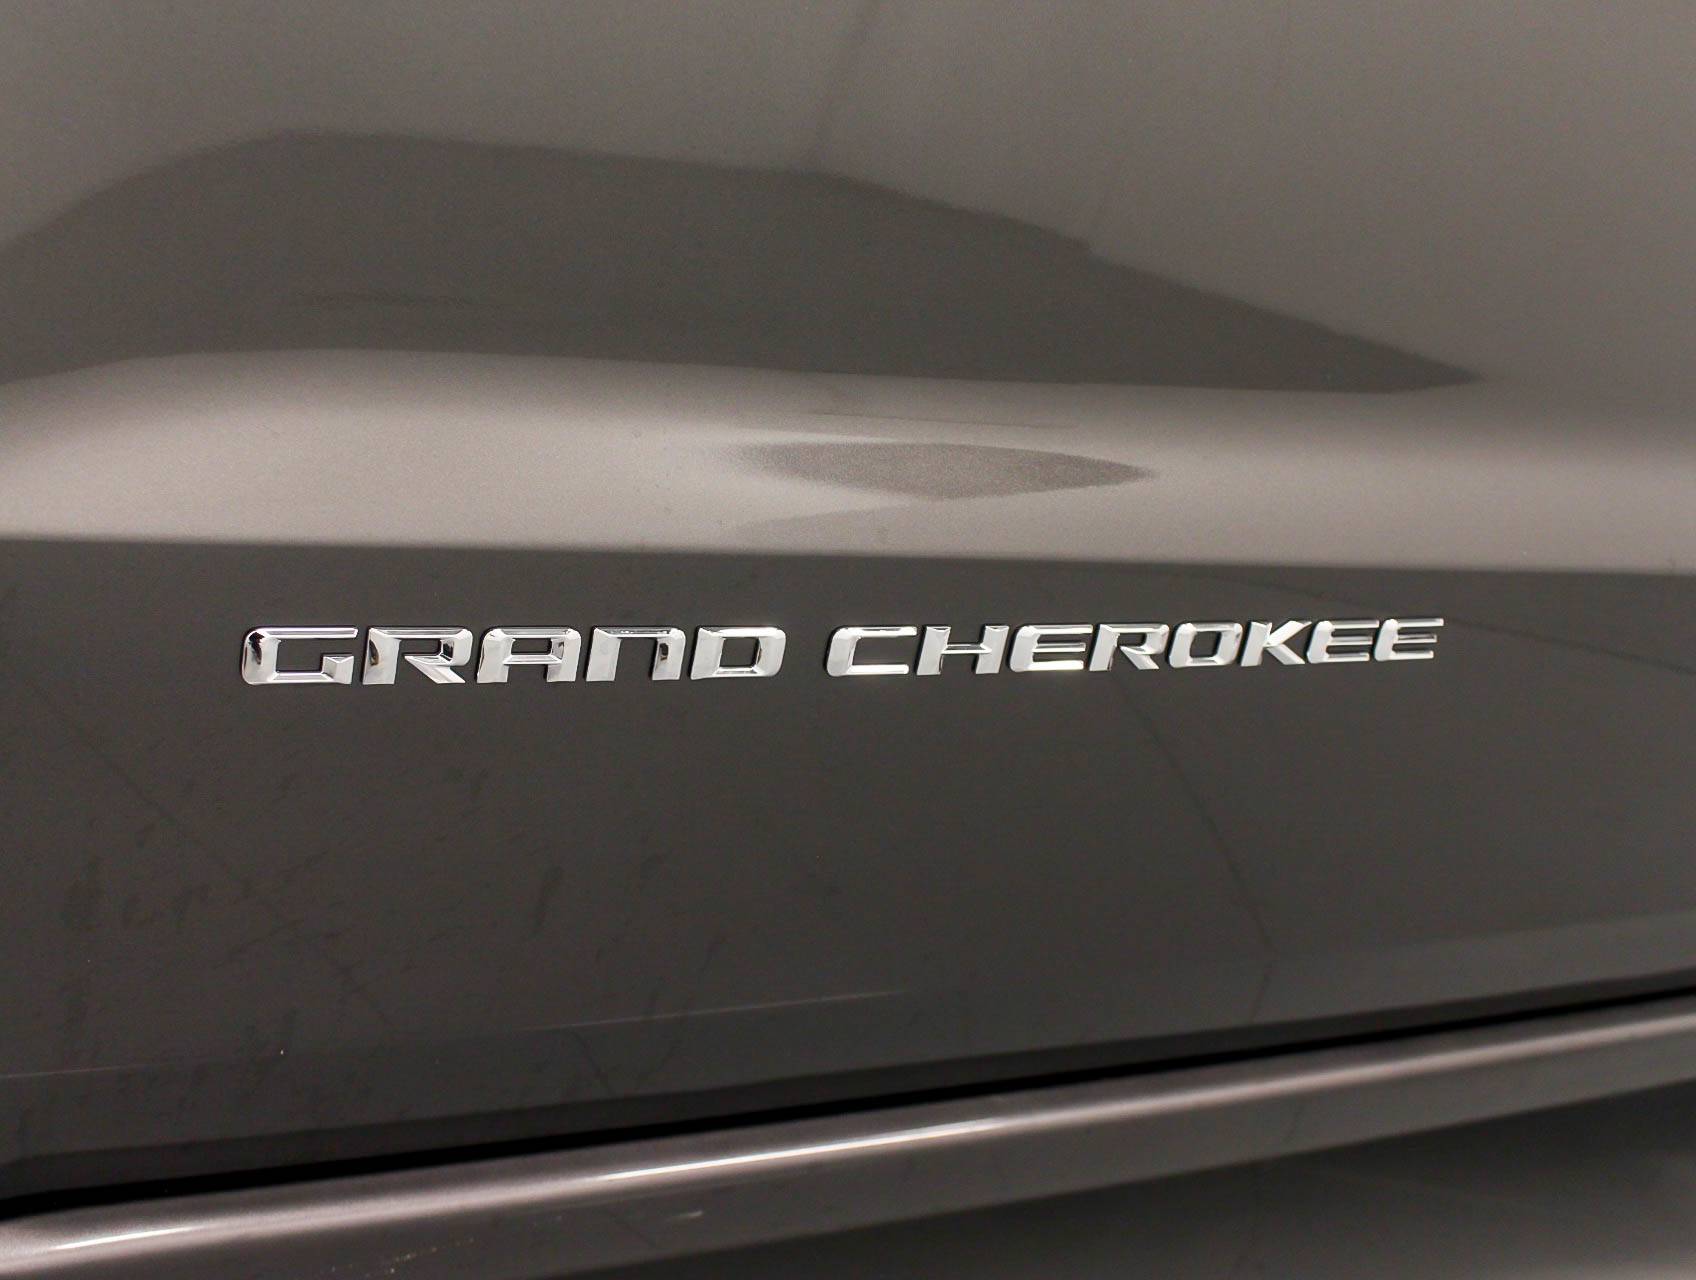 Florida Fine Cars - Used JEEP GRAND CHEROKEE 2014 MIAMI Overland 4x4